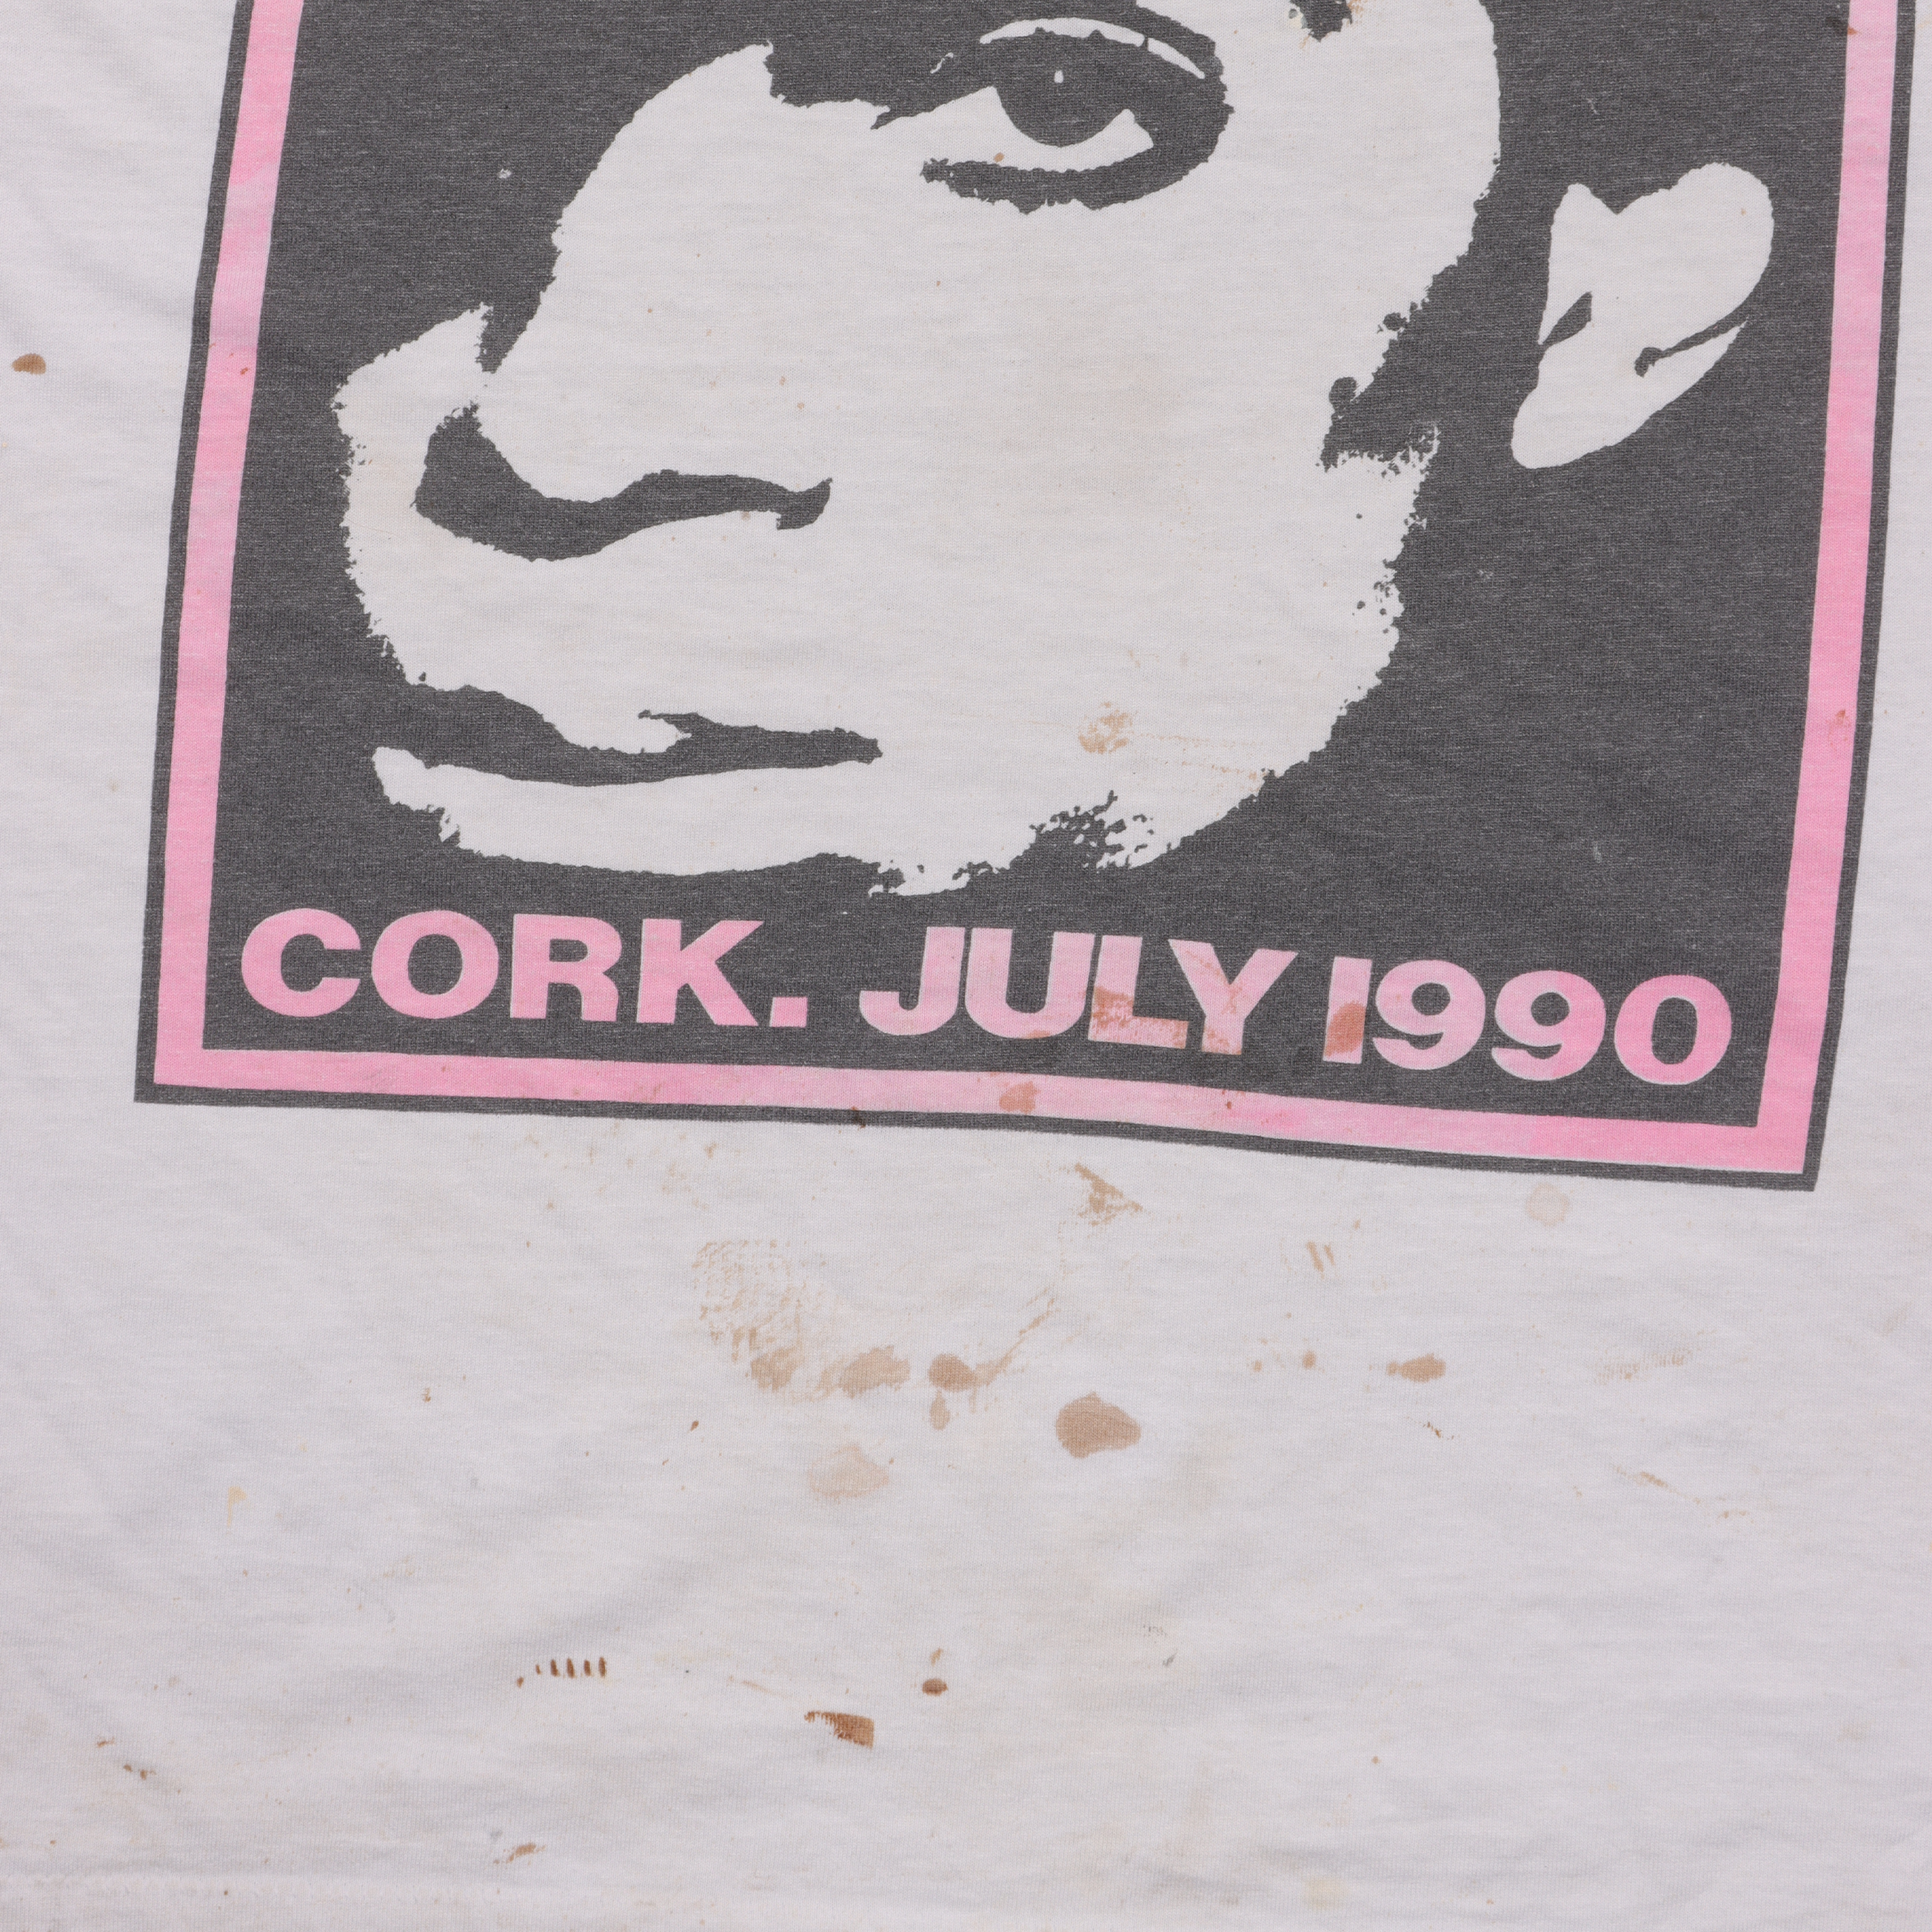 1990 Prince CORK T-Shirt